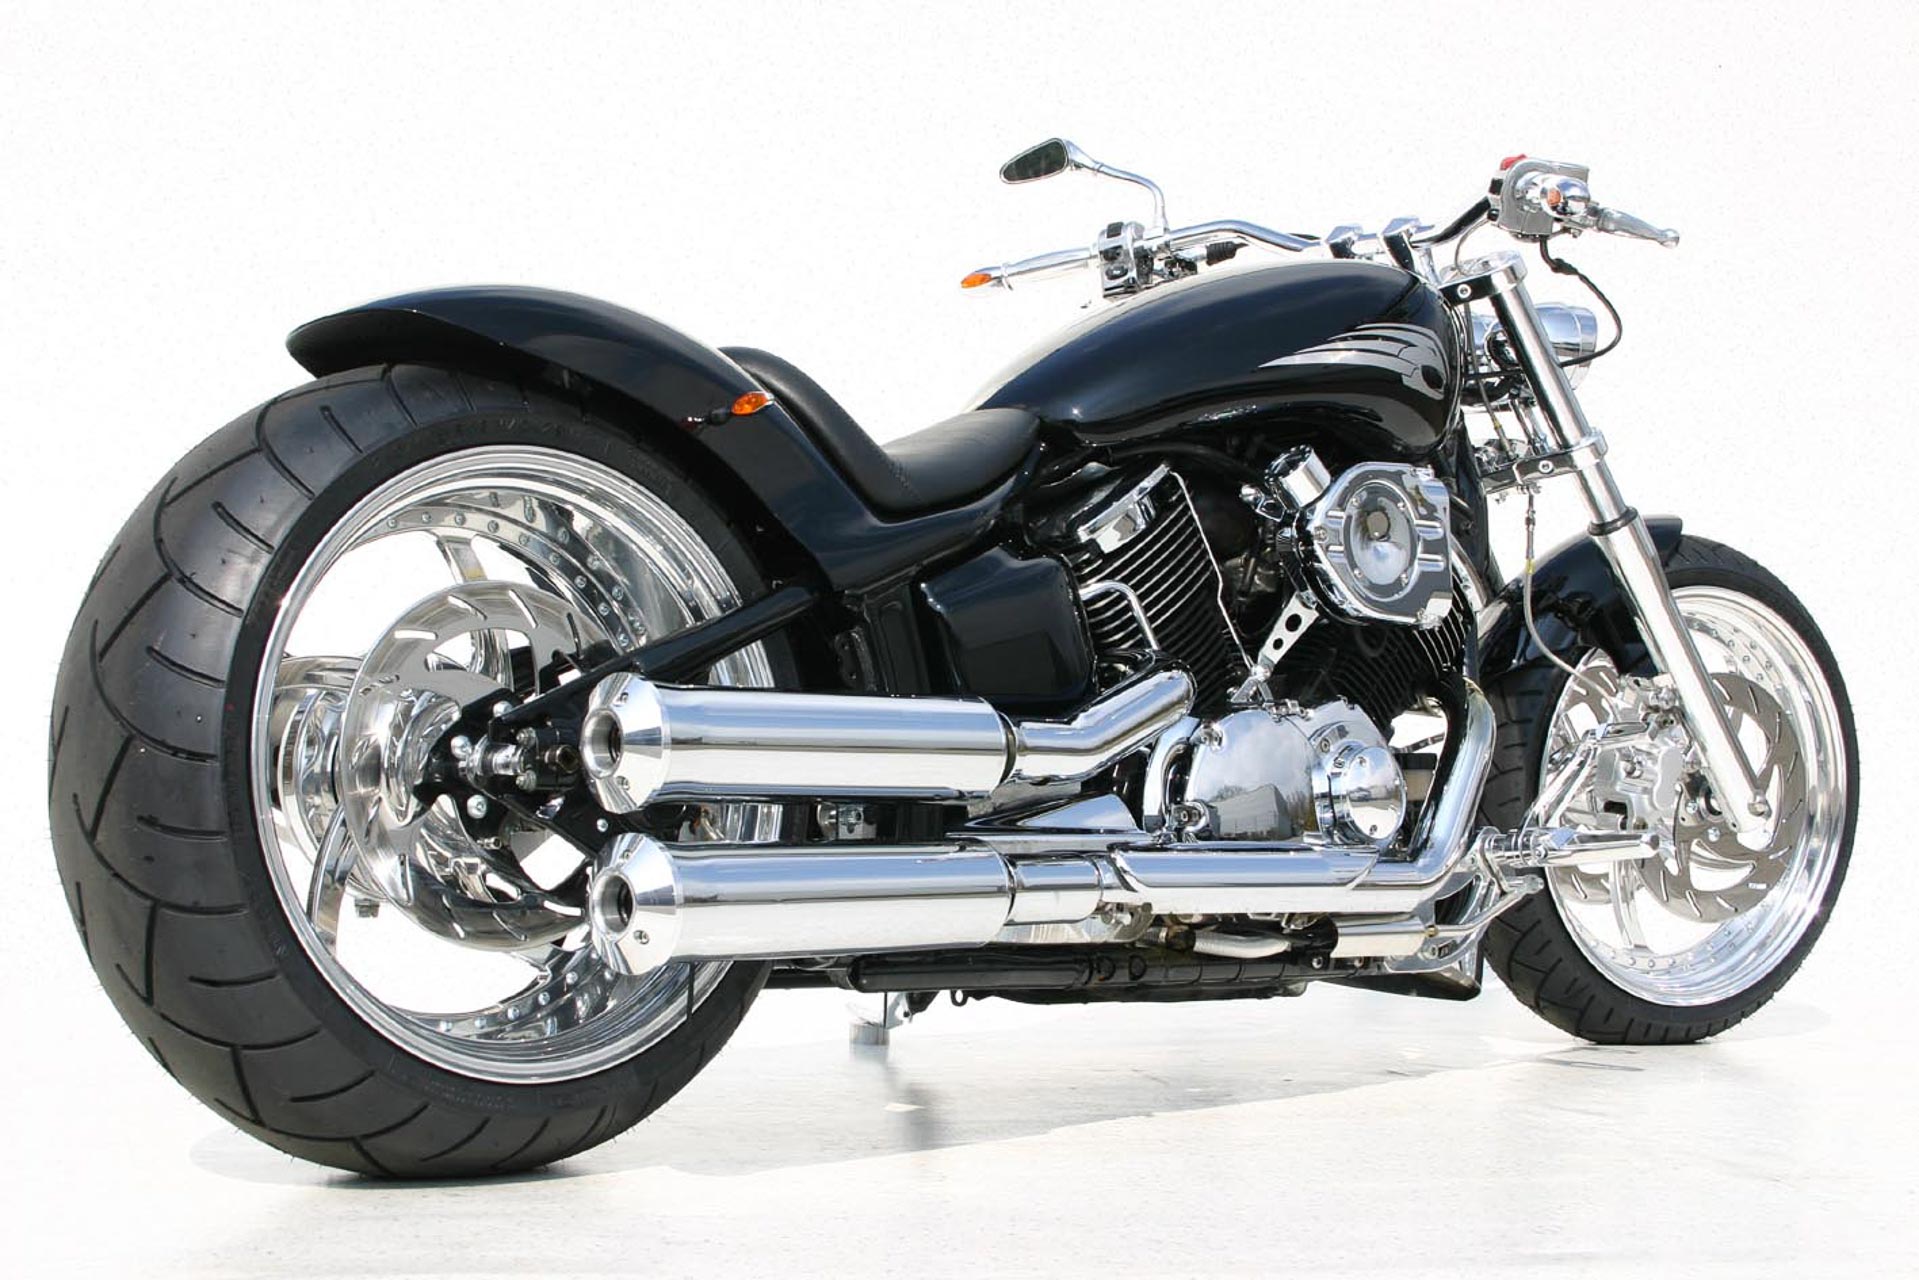 Maquette moto : Yamaha XV1600 Road Star Custom